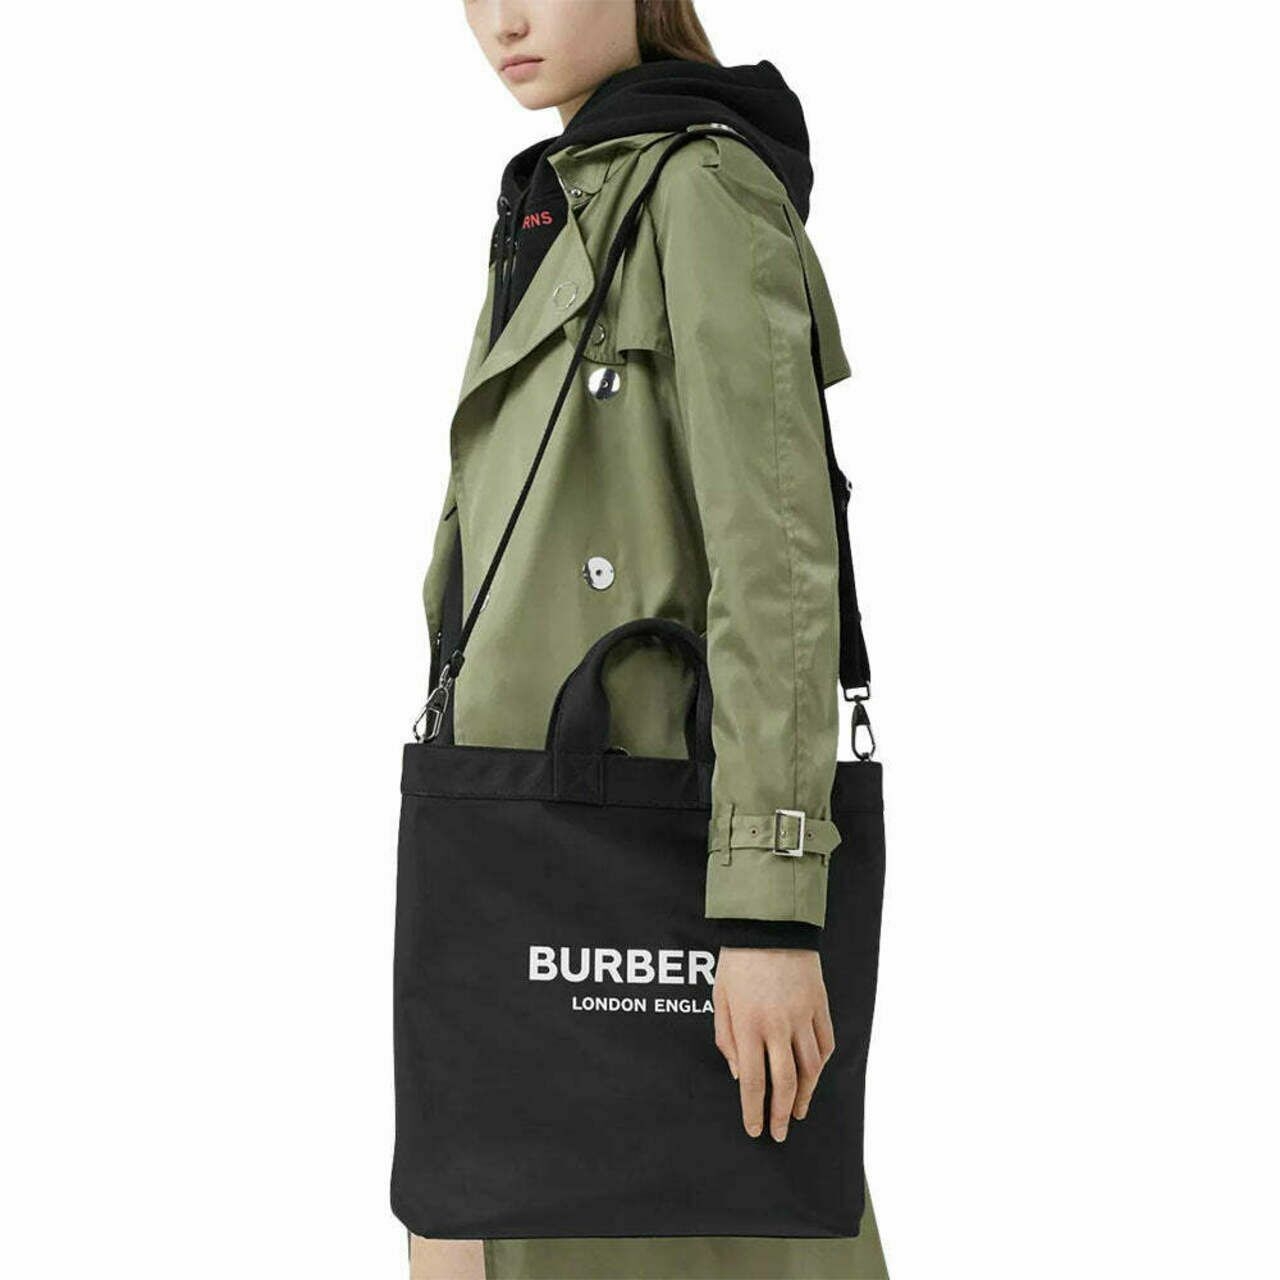 Burberry Logo Print ECONYL Tote Bag Black